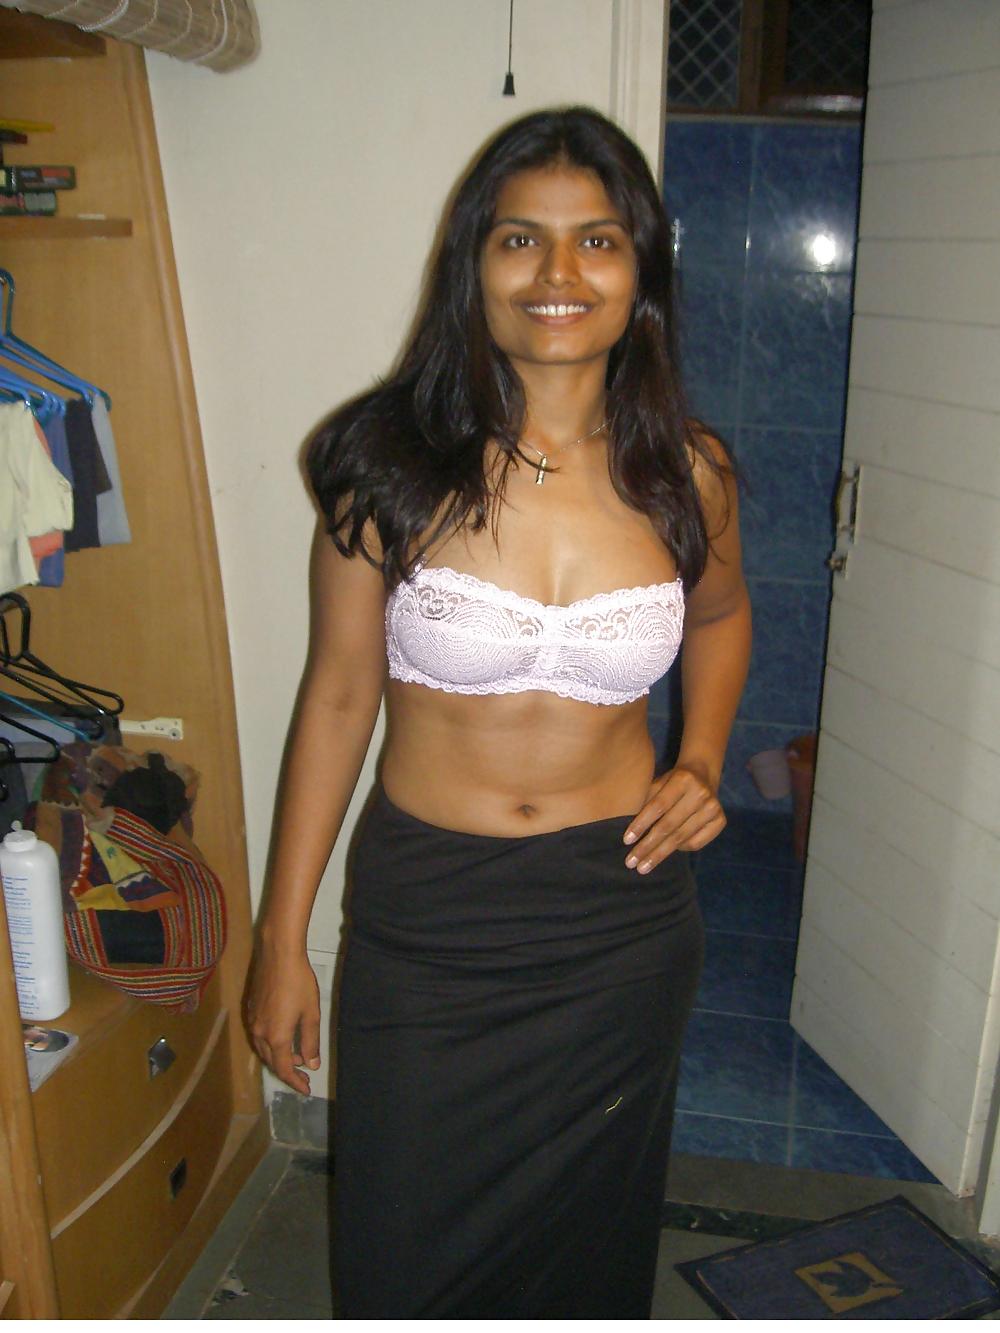 Sex Indian beauty - as amateur as it should be! image